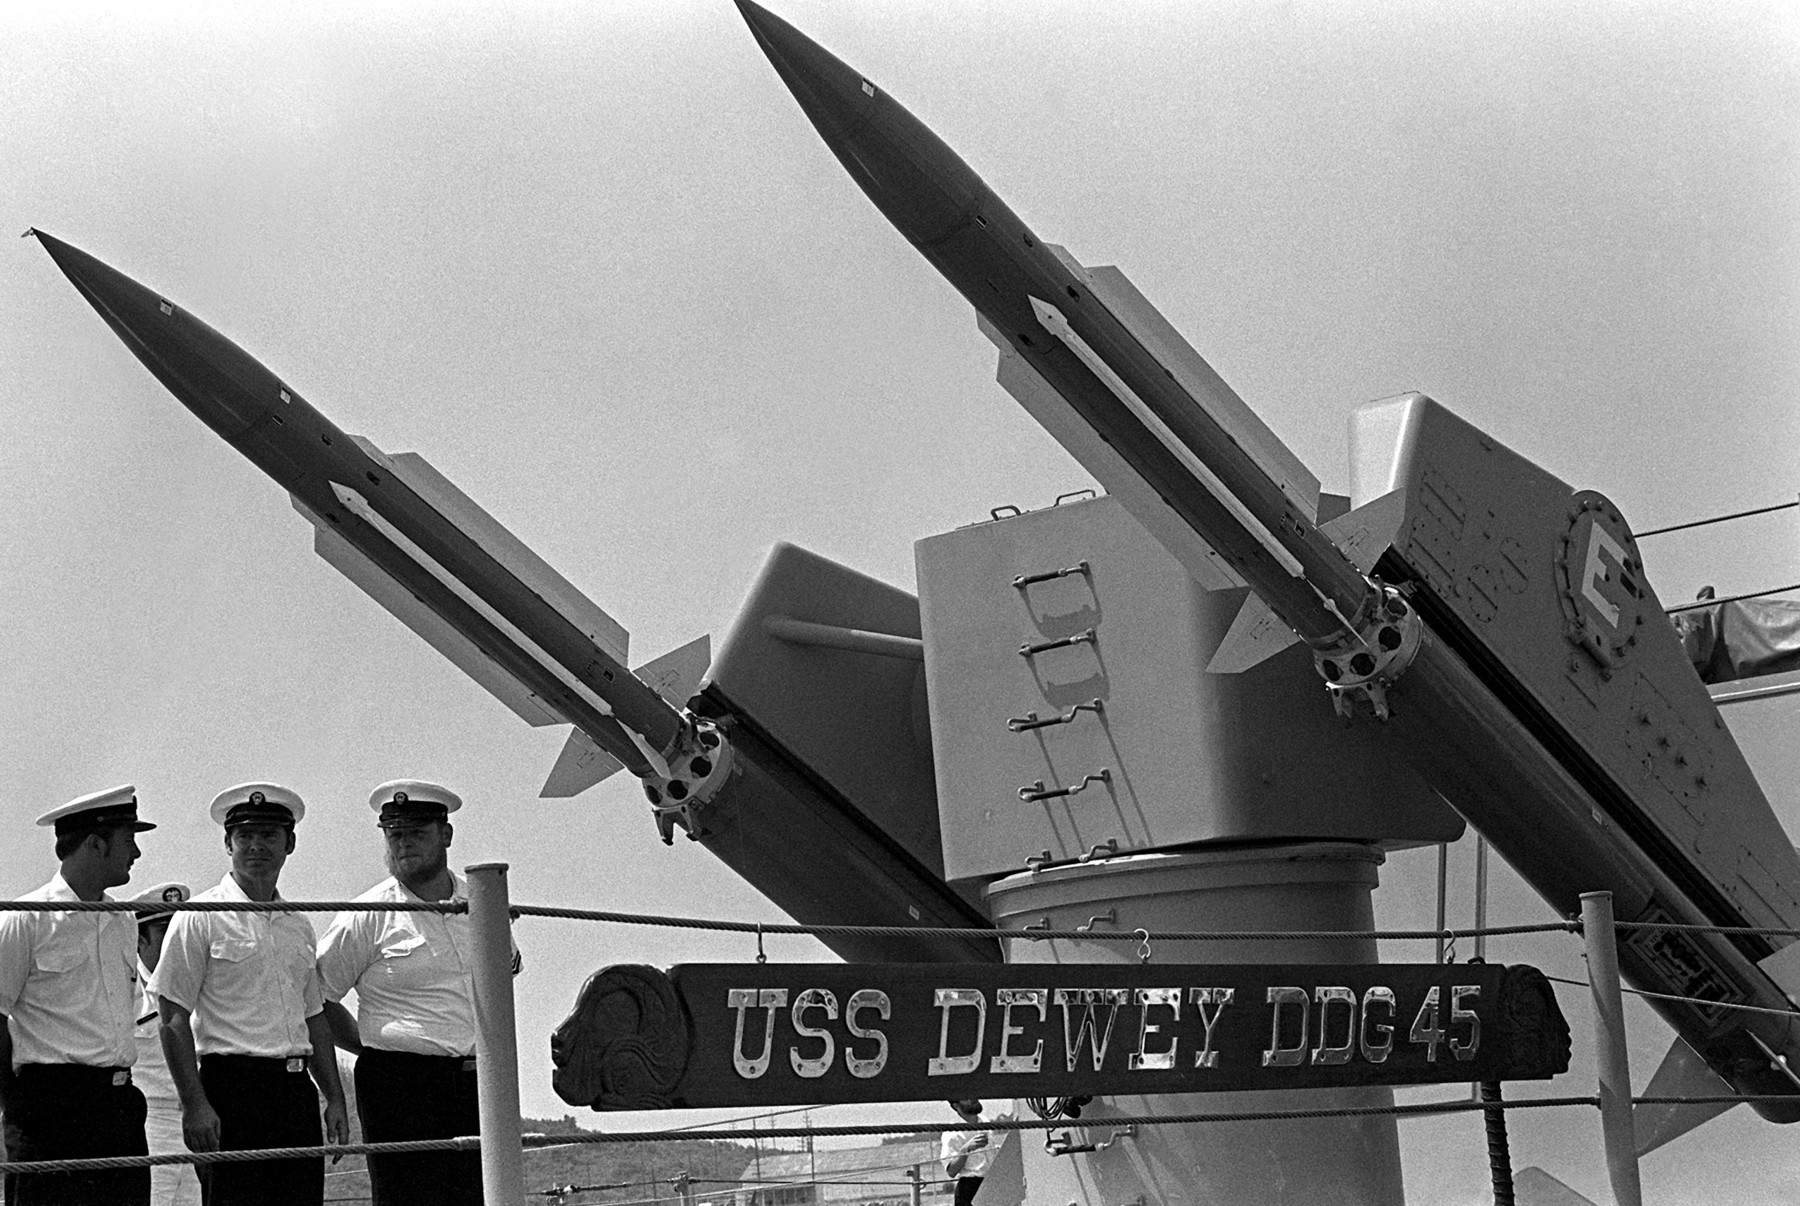 ddg-45 uss dewey farragut class destroyer us navy 1979 18 mk-10 launcher rim-67a standard missile sm-1er sam